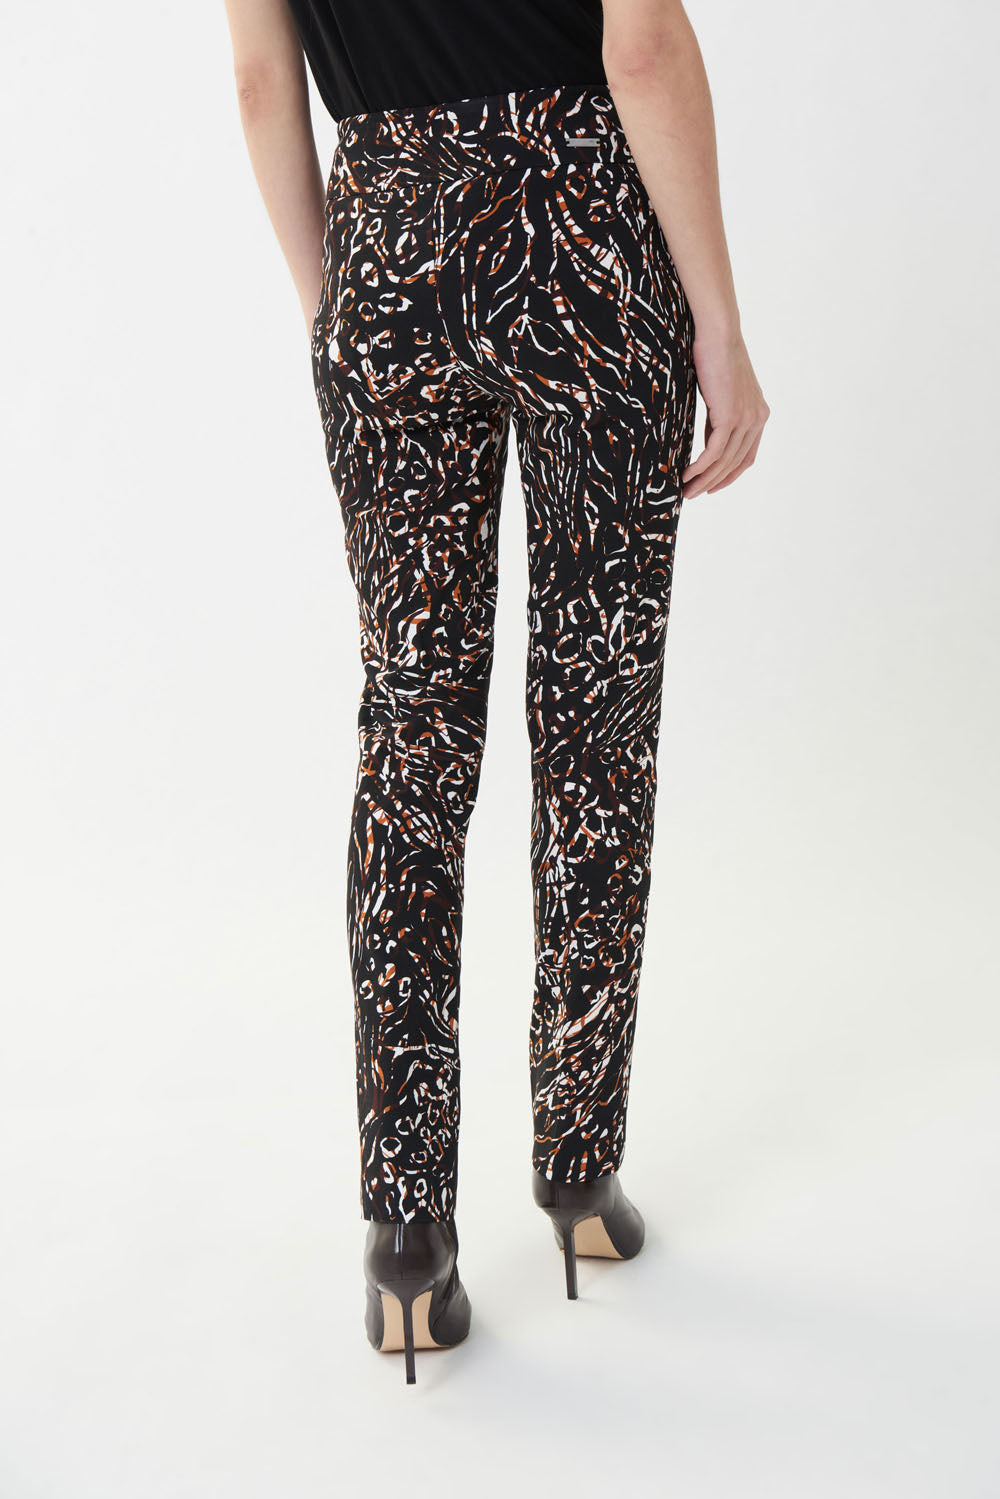 Joseph Ribkoff Black-Multi Pants Style 223277